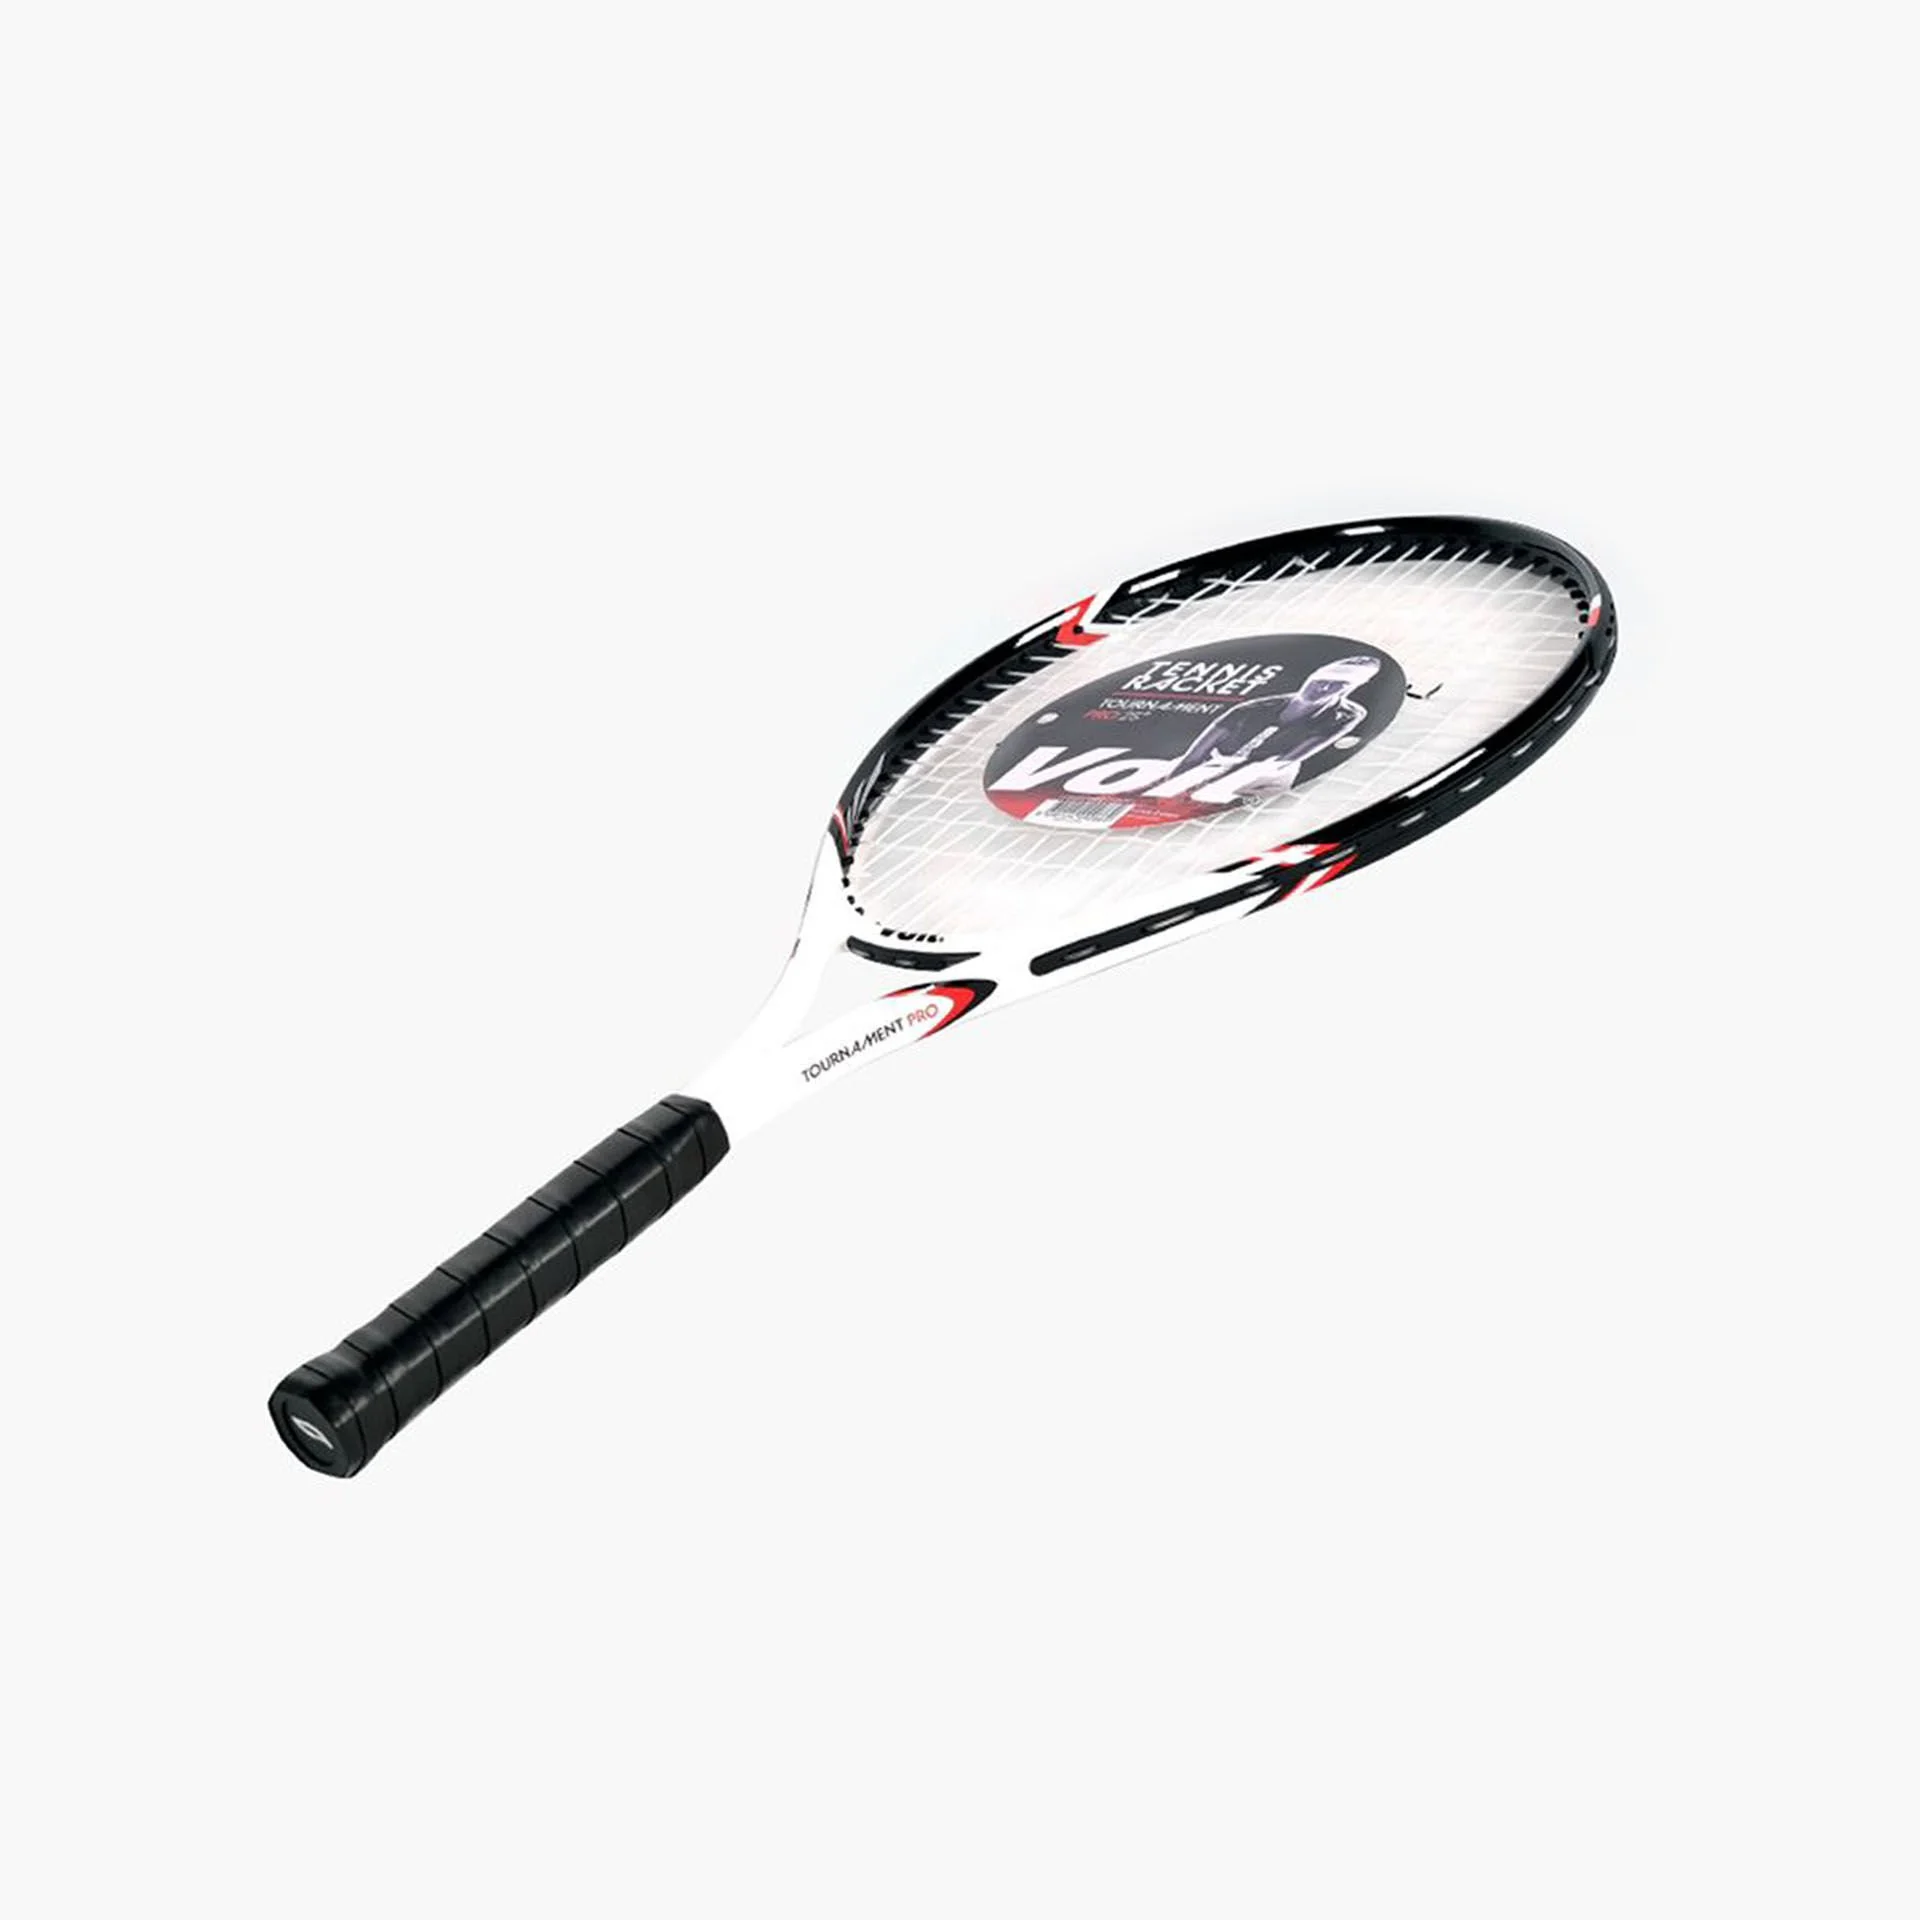 Voit - Voit Tournament Pro Tenis Raketi 25 Inch Kırmızı